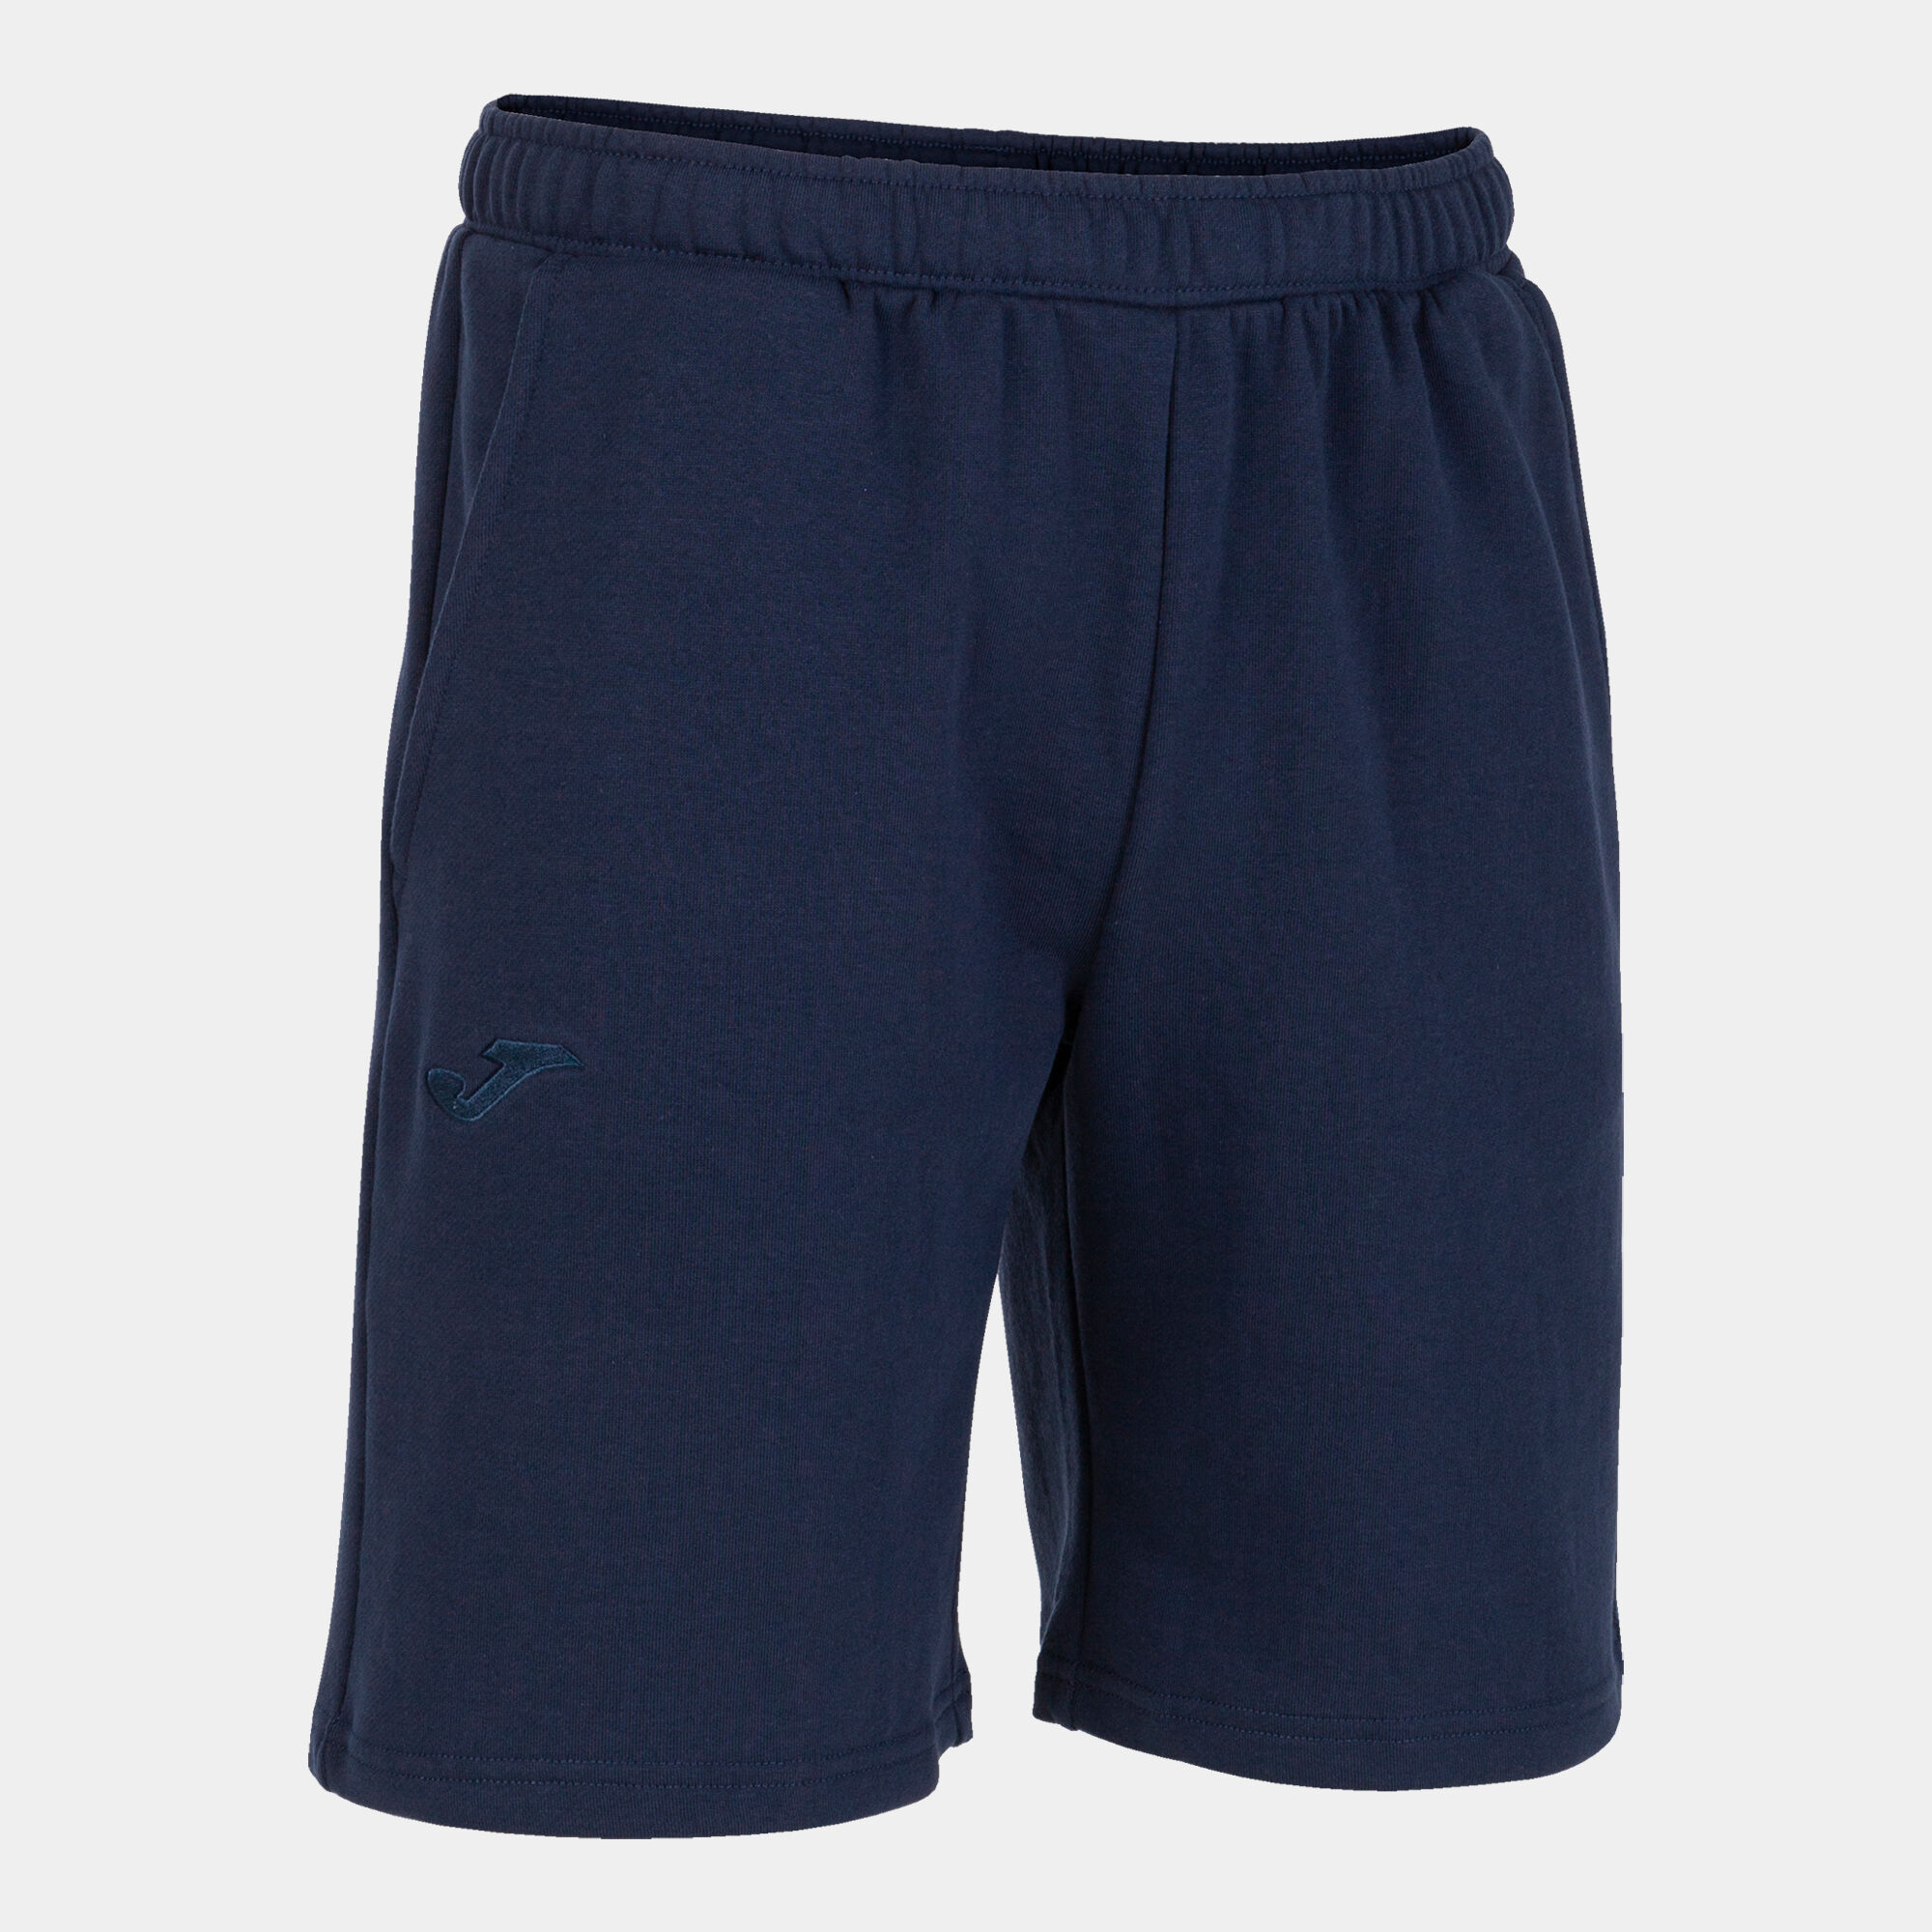 Bermuda shorts man Jungle navy blue